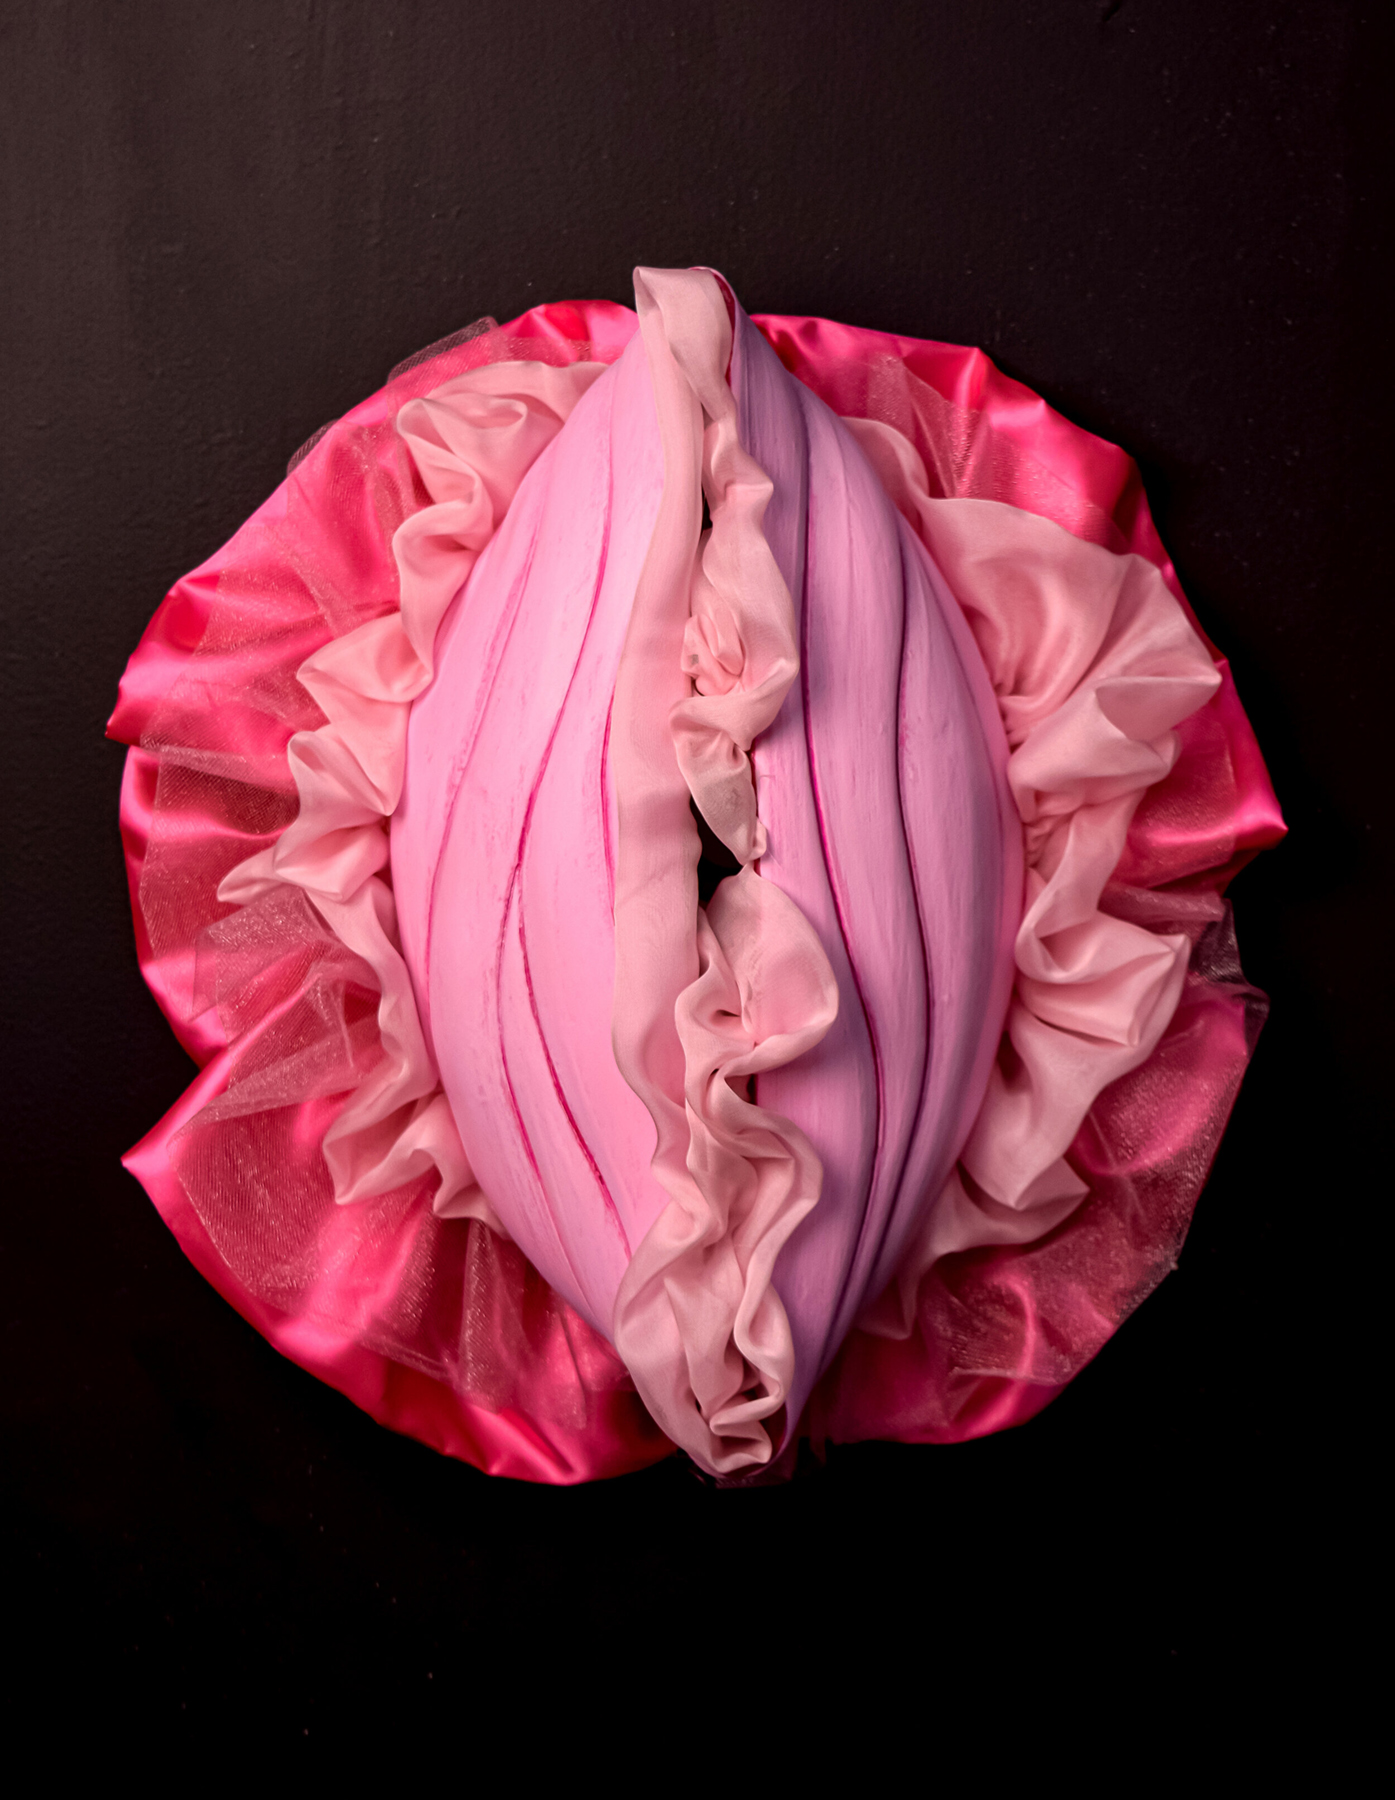 Ceramic and fabric sculpture of female genitalia, courtesy of the artist